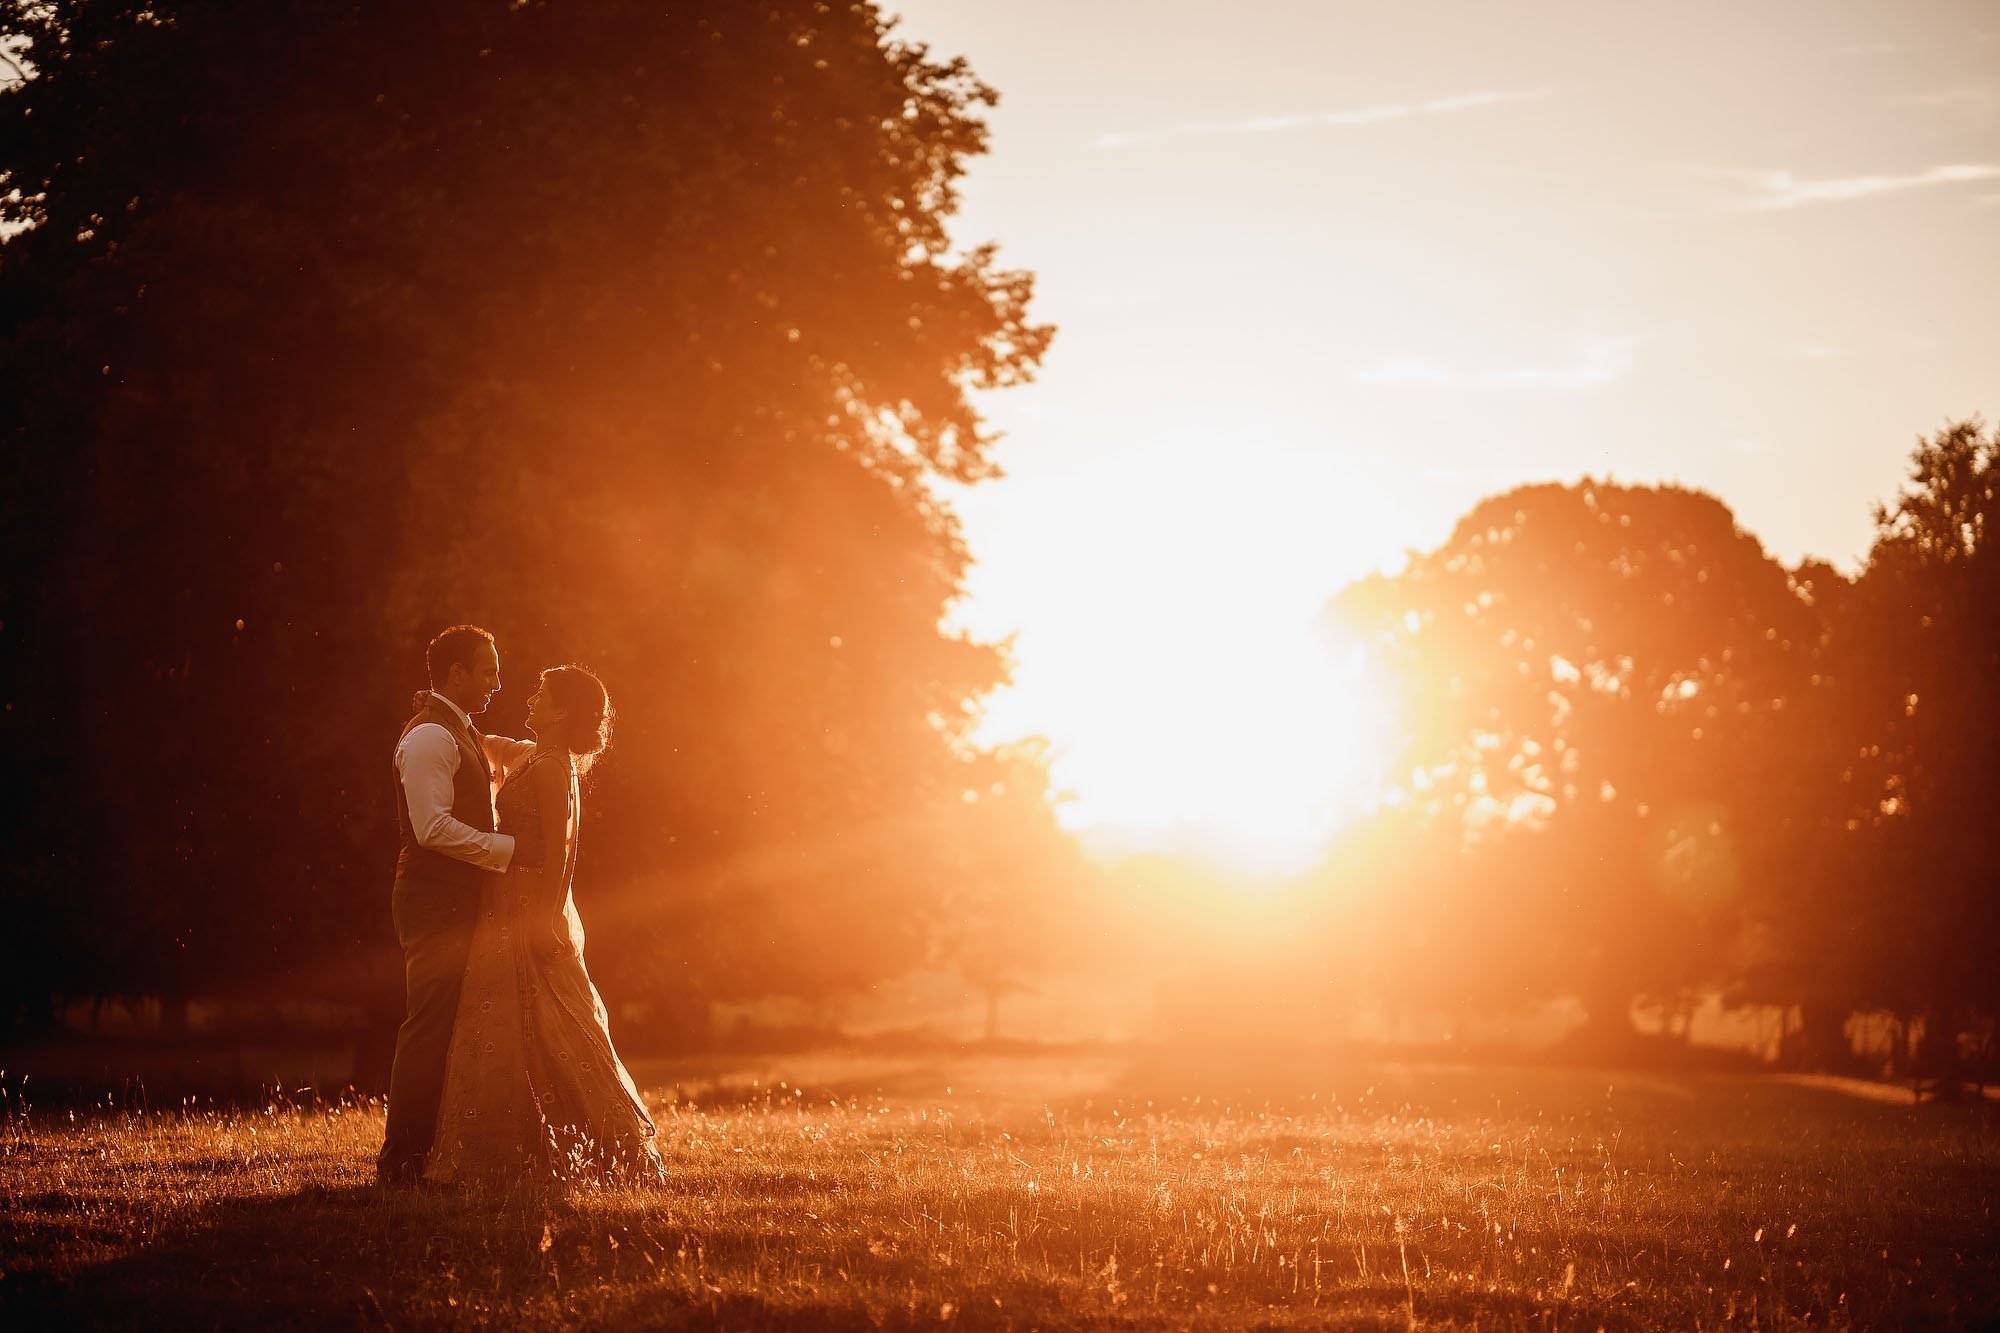 Bridwell park devon weddings - wedding photography at bridwell park by arj photography